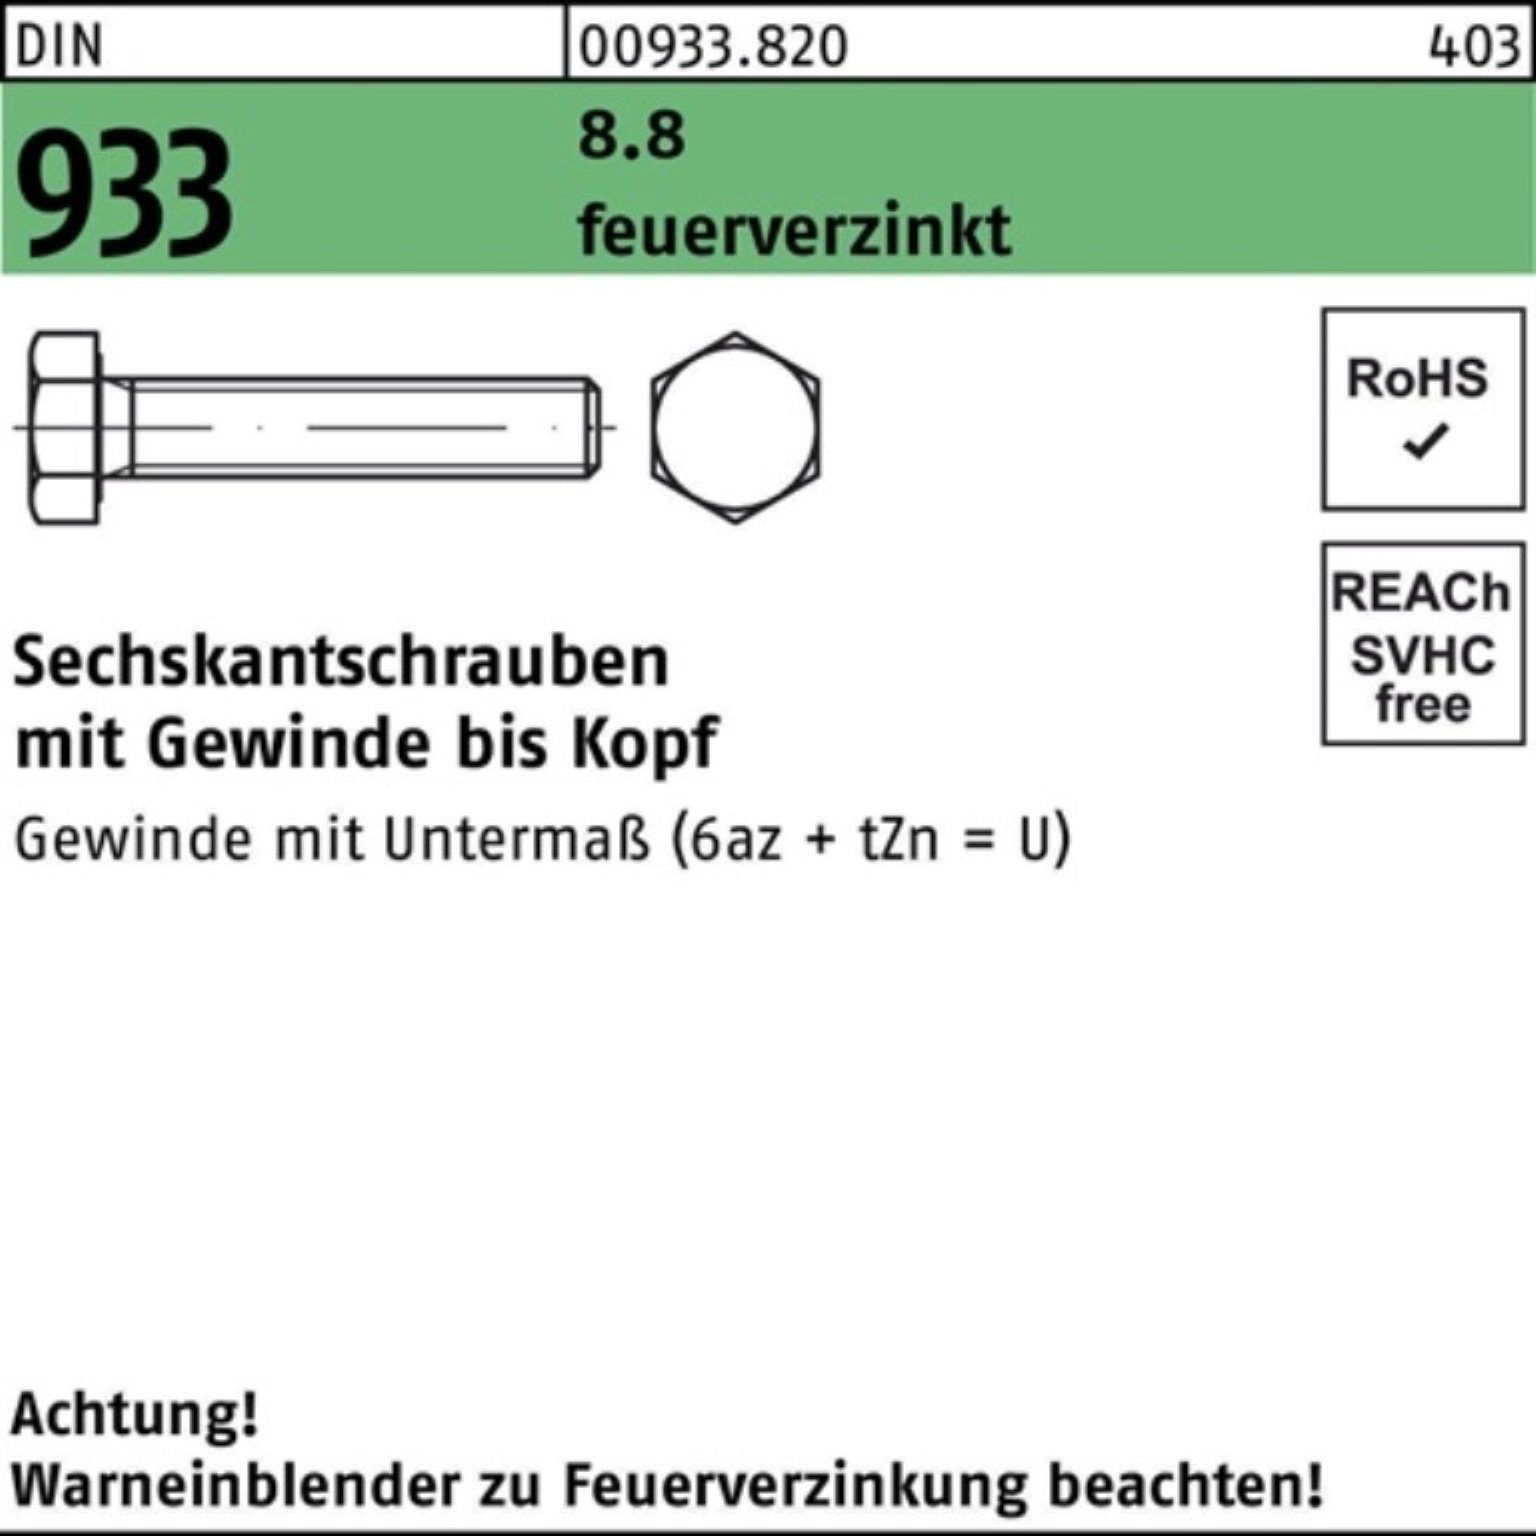 Reyher Sechskantschraube 100er Pack Sechskantschraube Stü M16x 933 feuerverz. 50 20 8.8 DIN VG